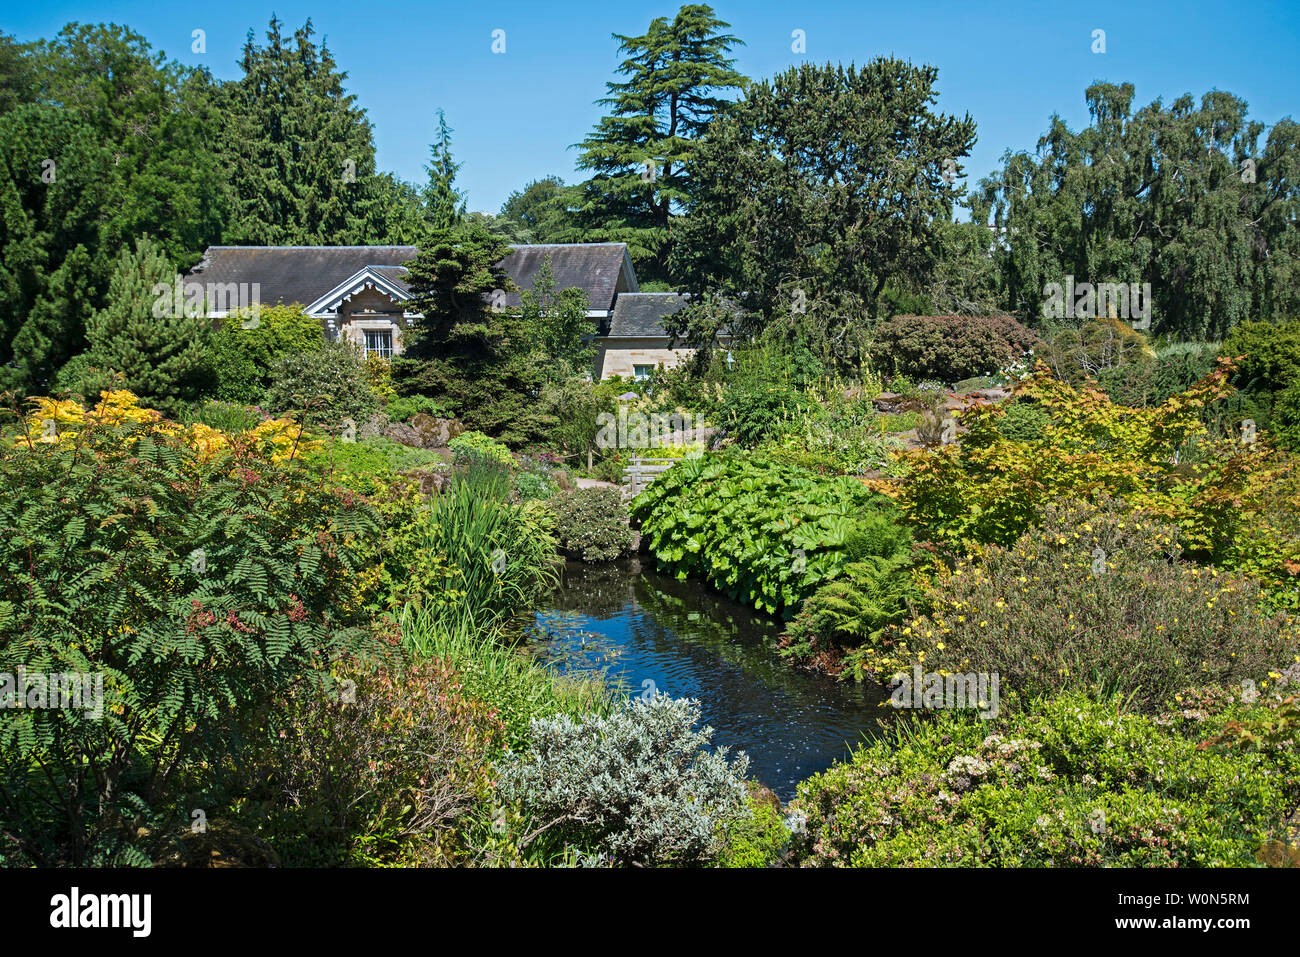 Rock Garden and Caledonia Hall in the Royal Botanic Garden Edinburgh (RBGE), Scotland, UK. Stock Photo